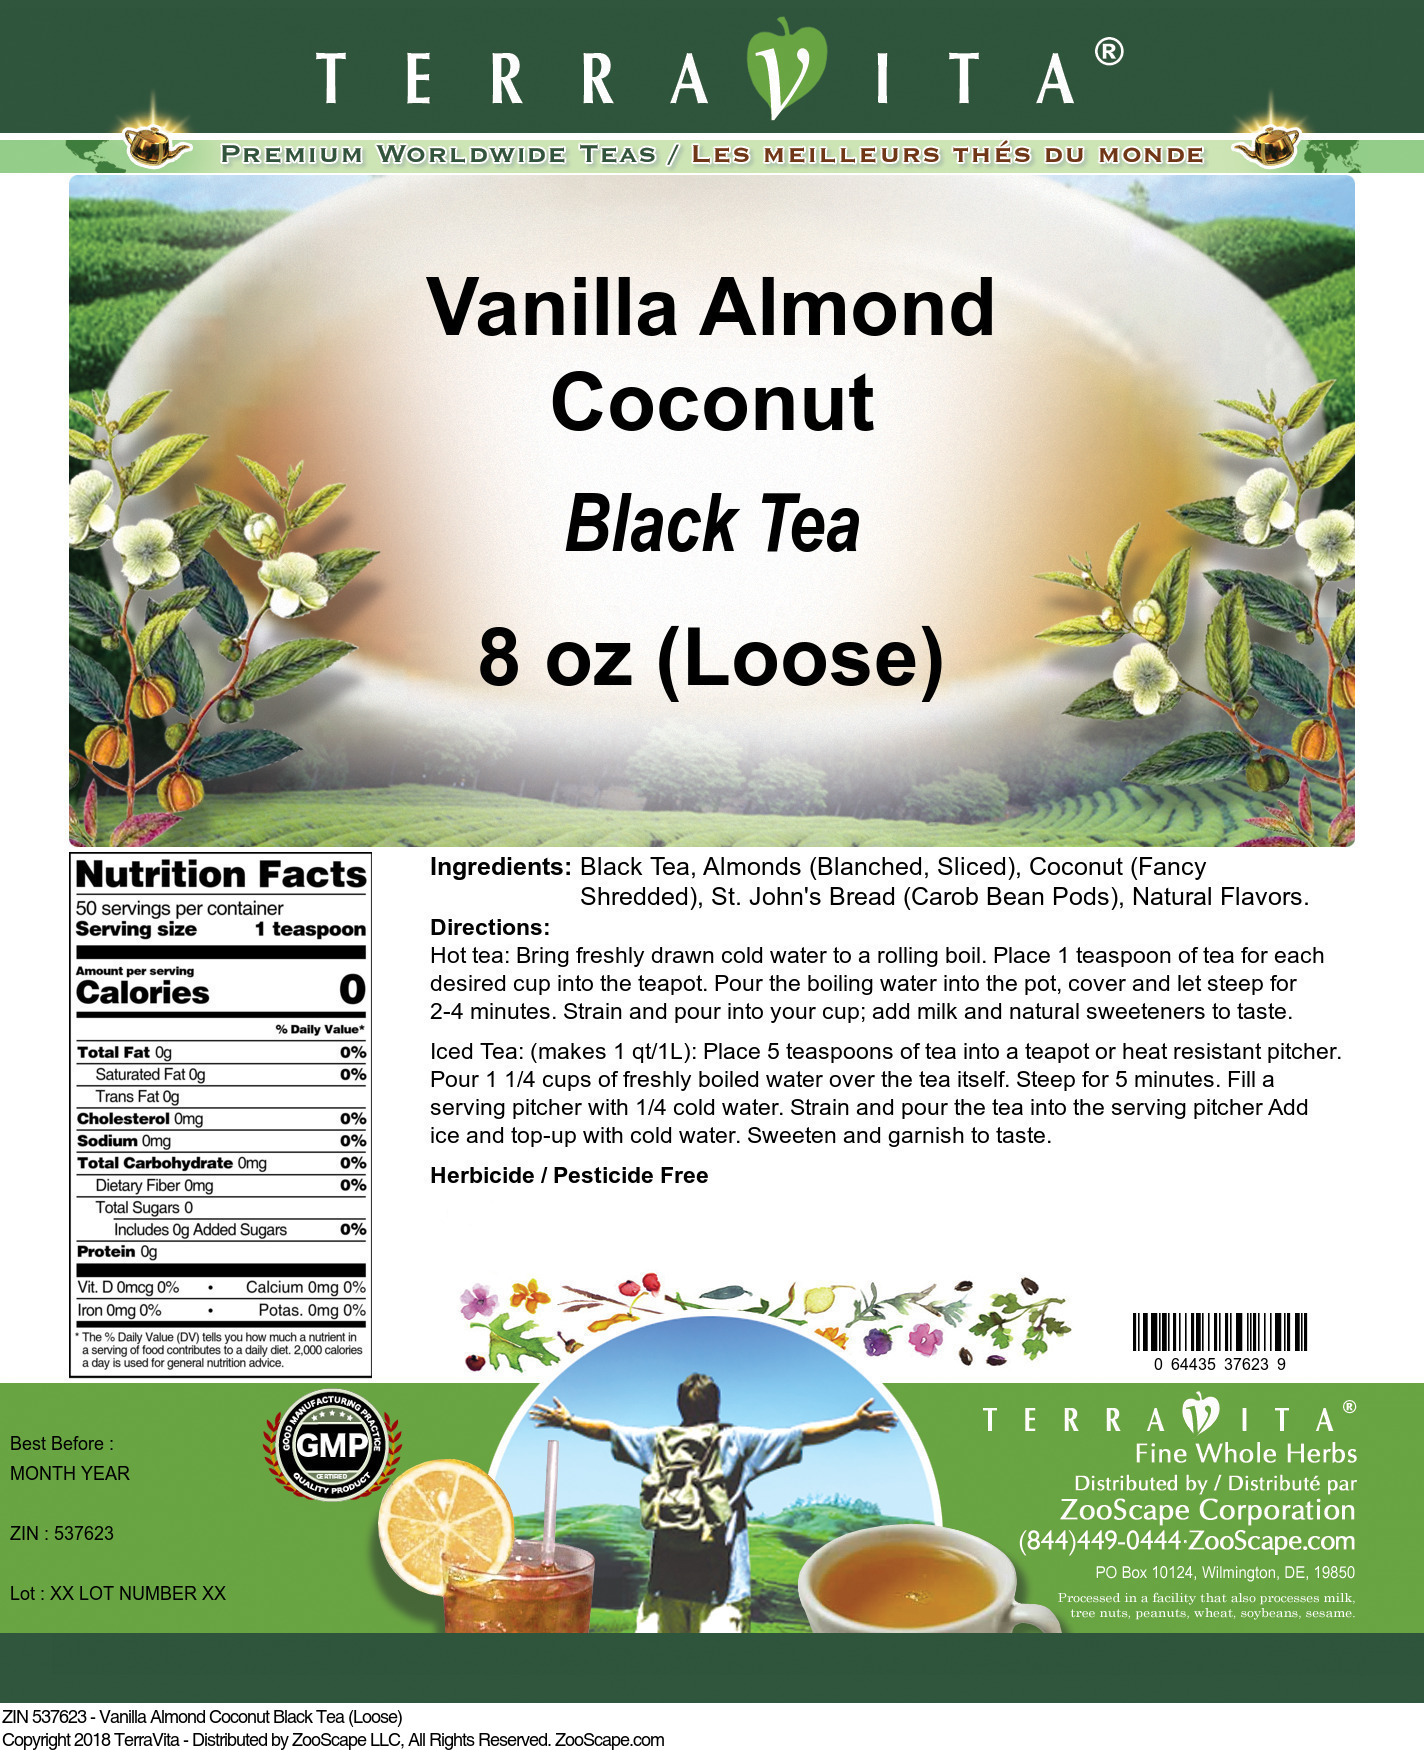 Vanilla Almond Coconut Black Tea (Loose) - Label